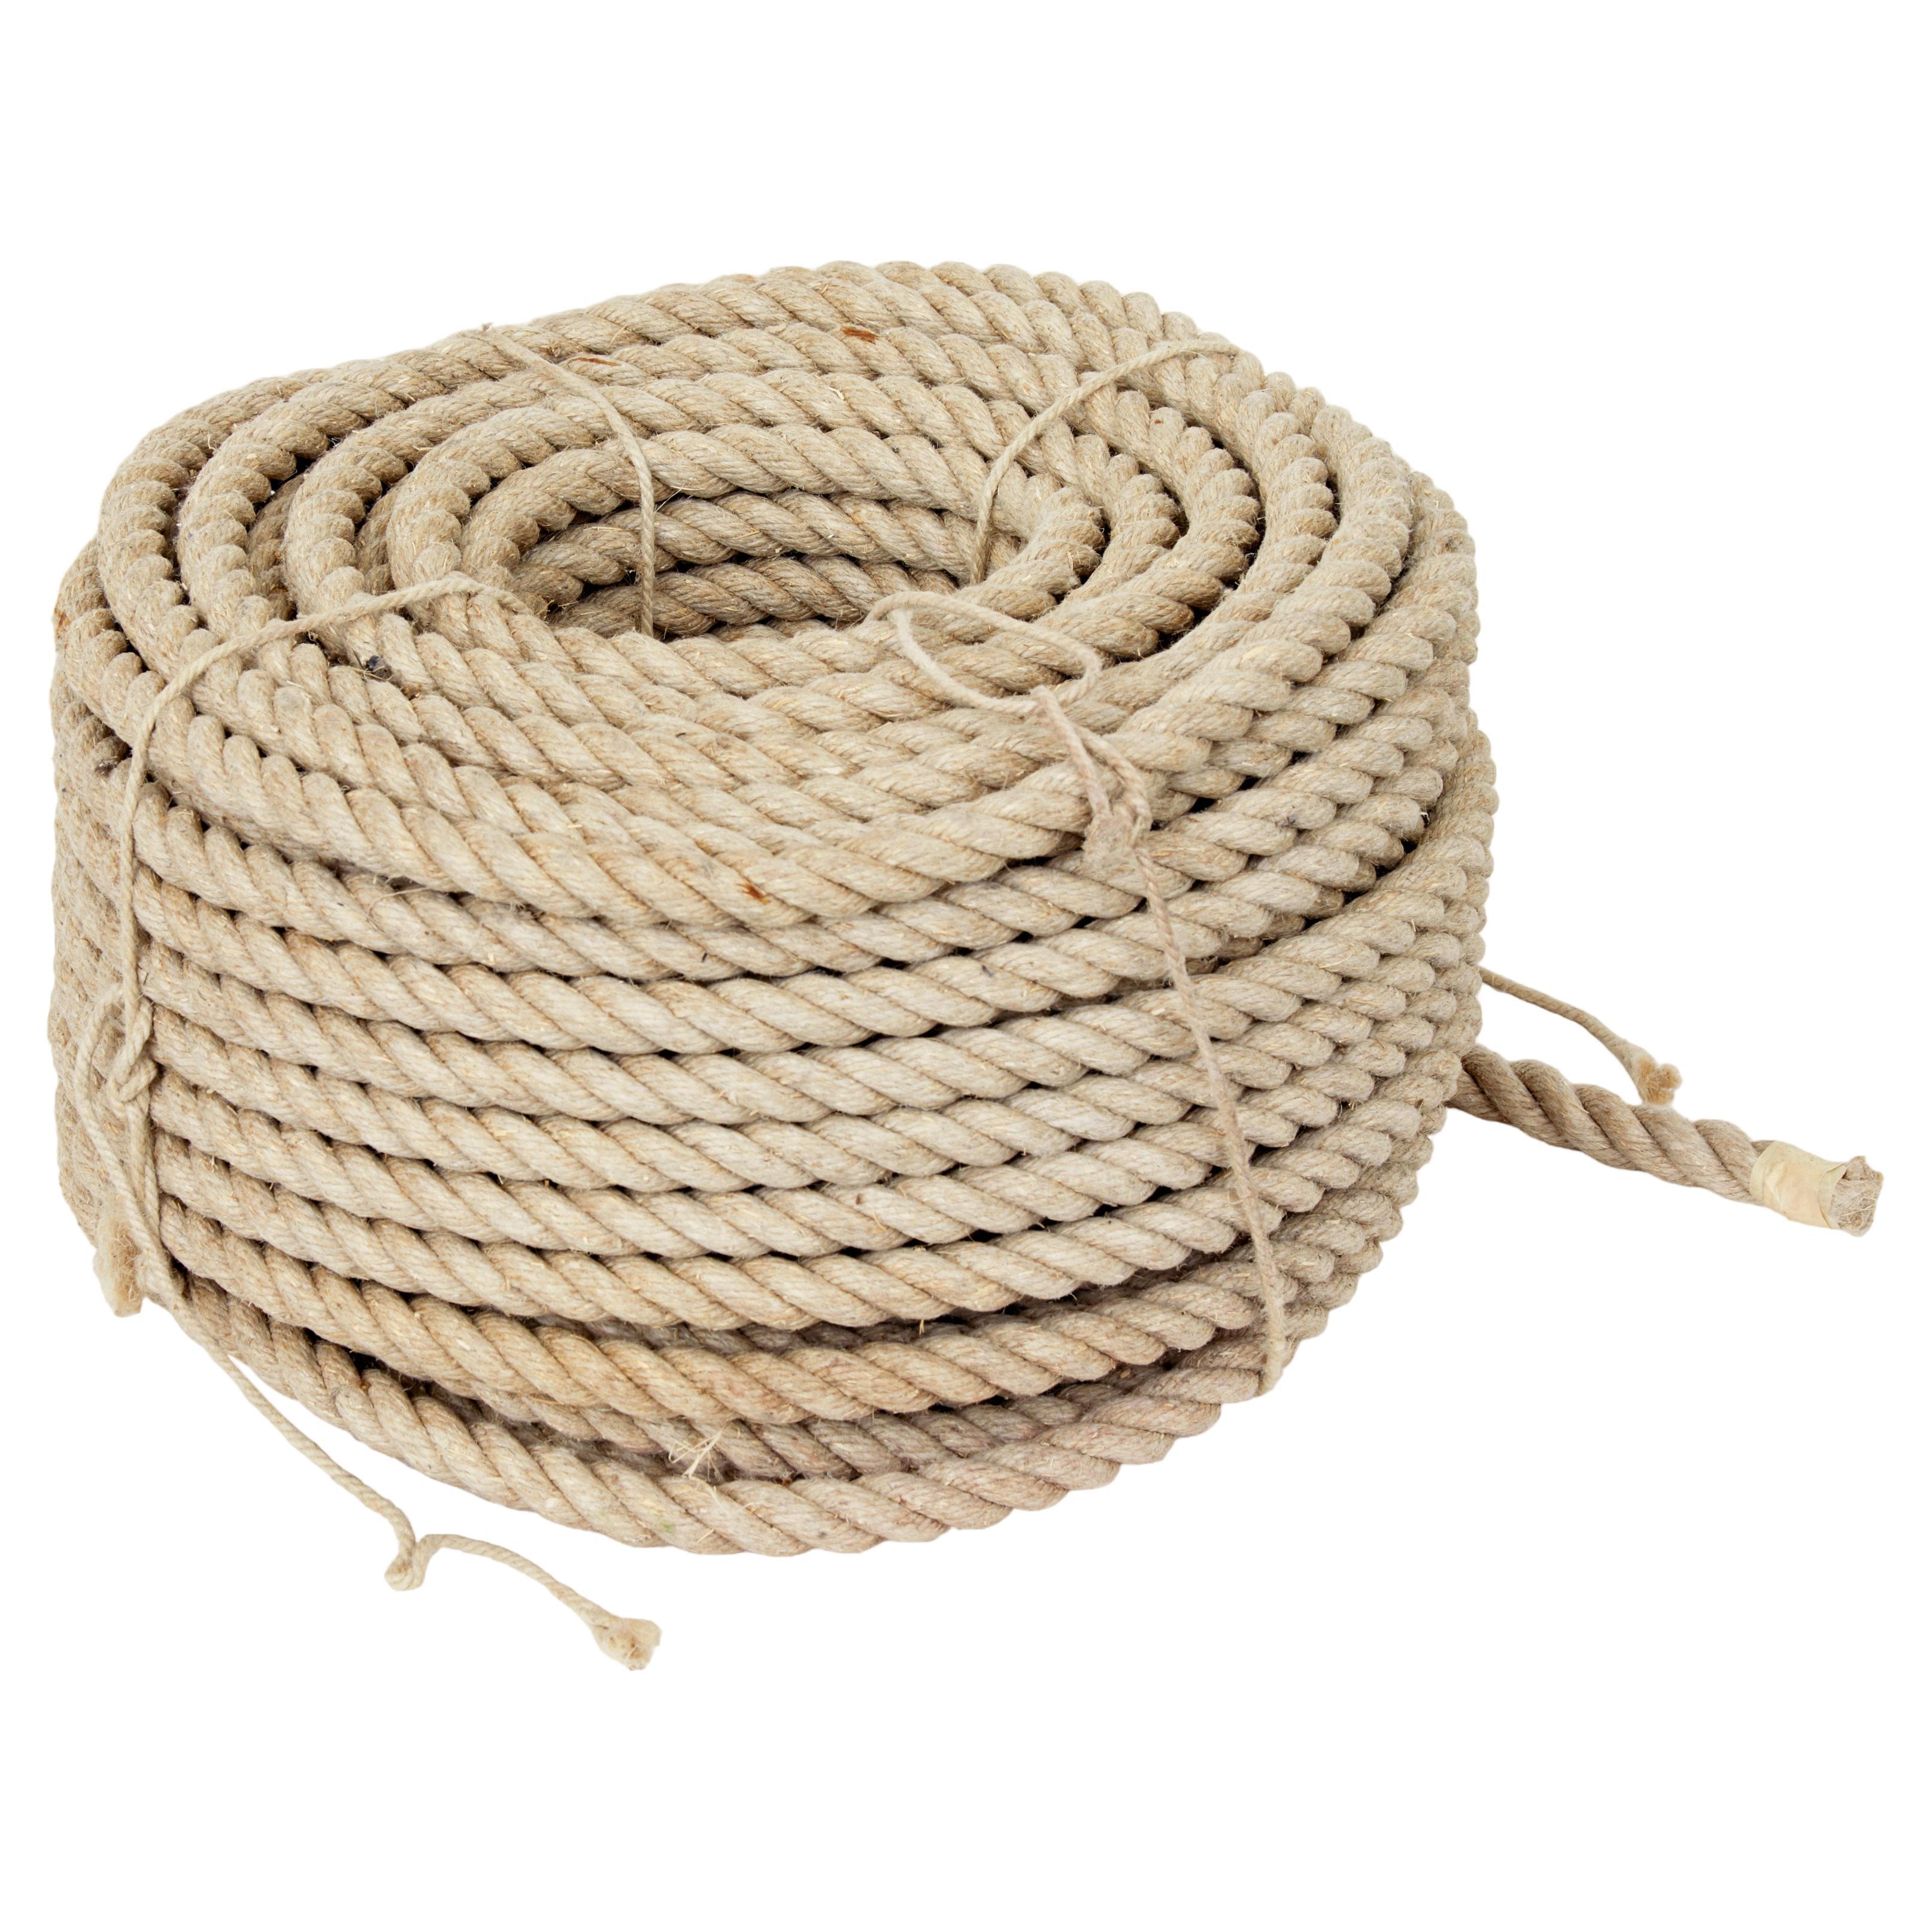 Mid 20th century unused bundle of rope For Sale